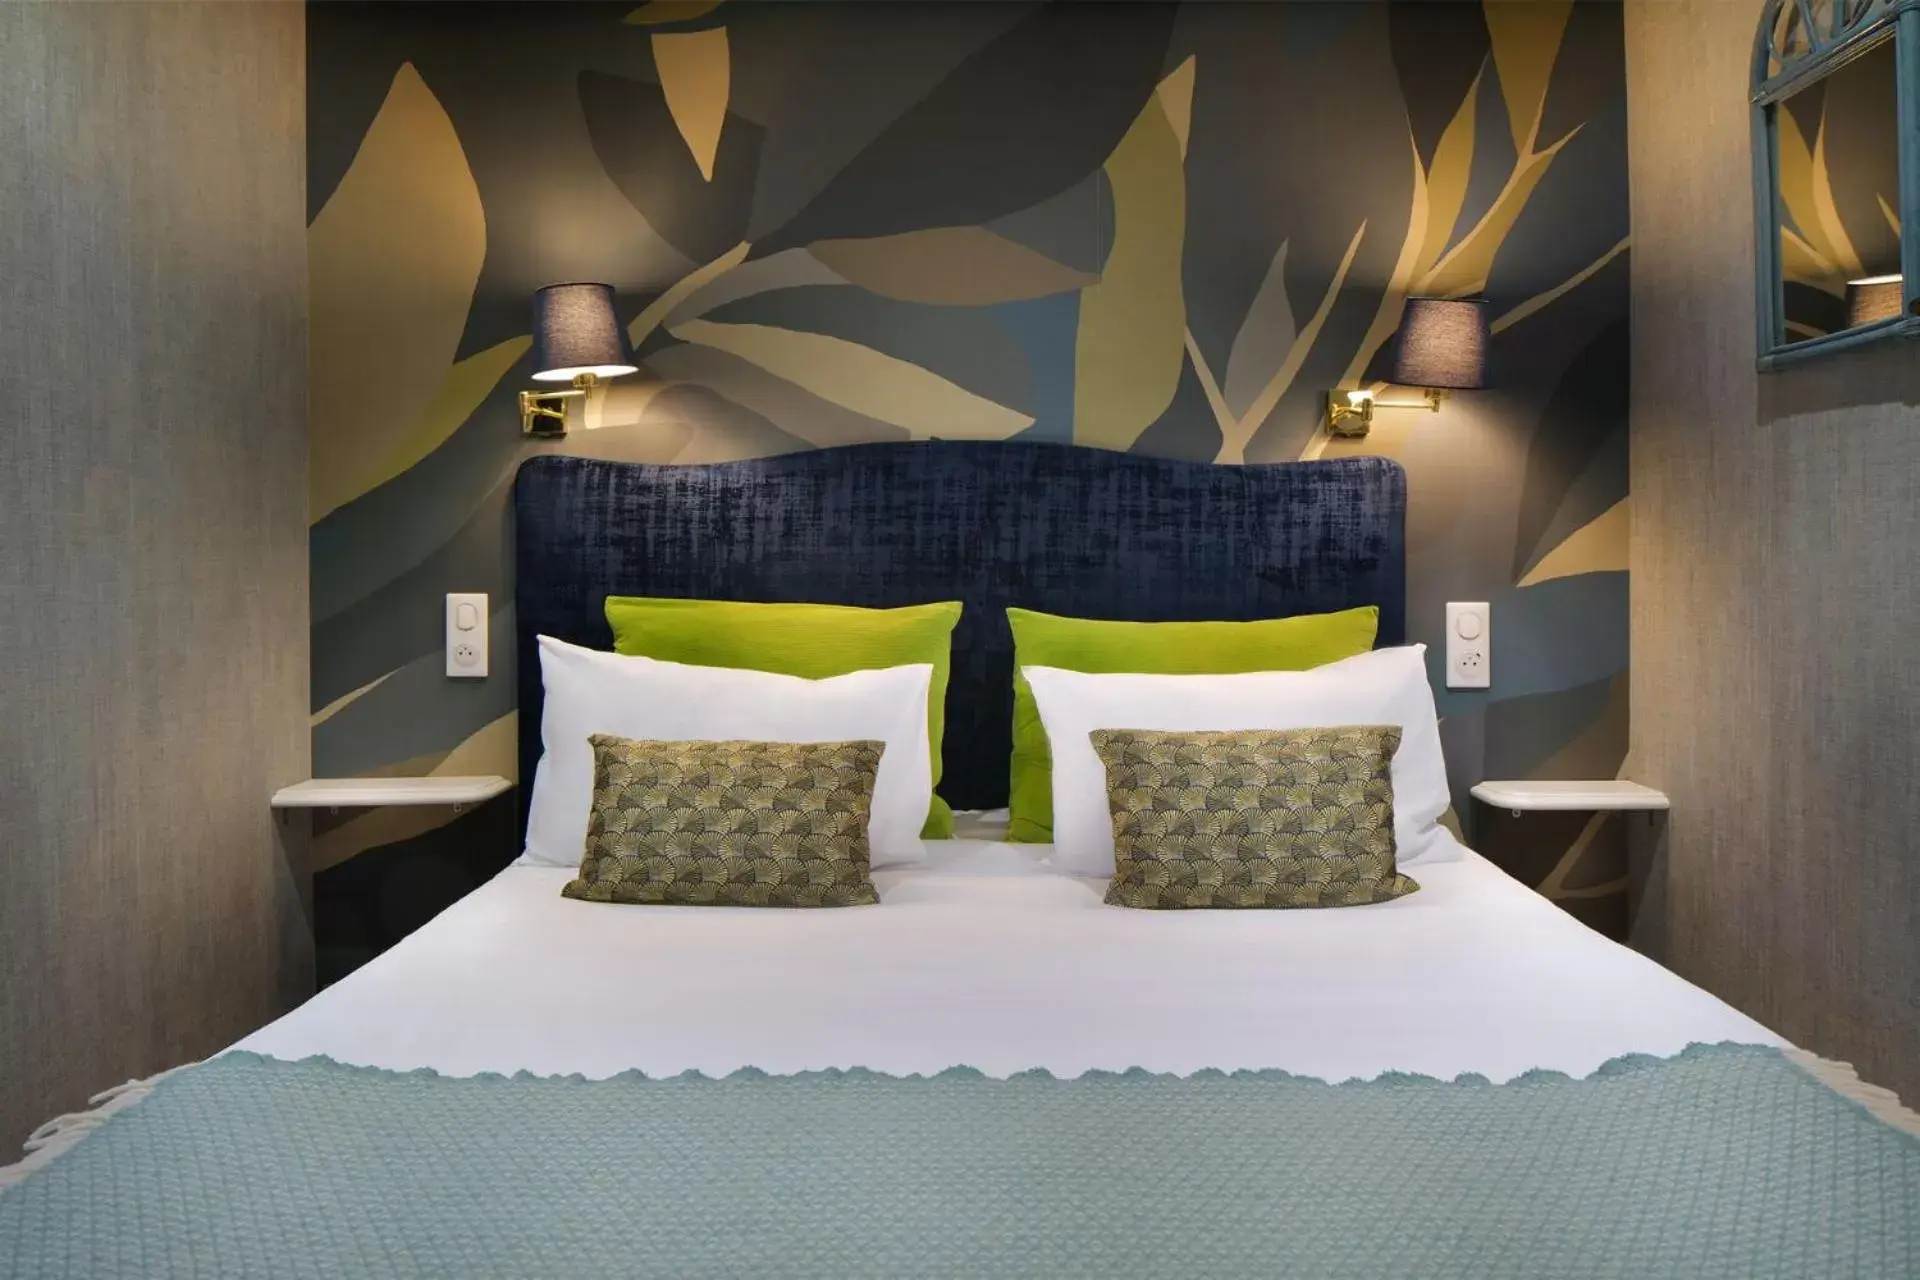 Bed in Hotel de France